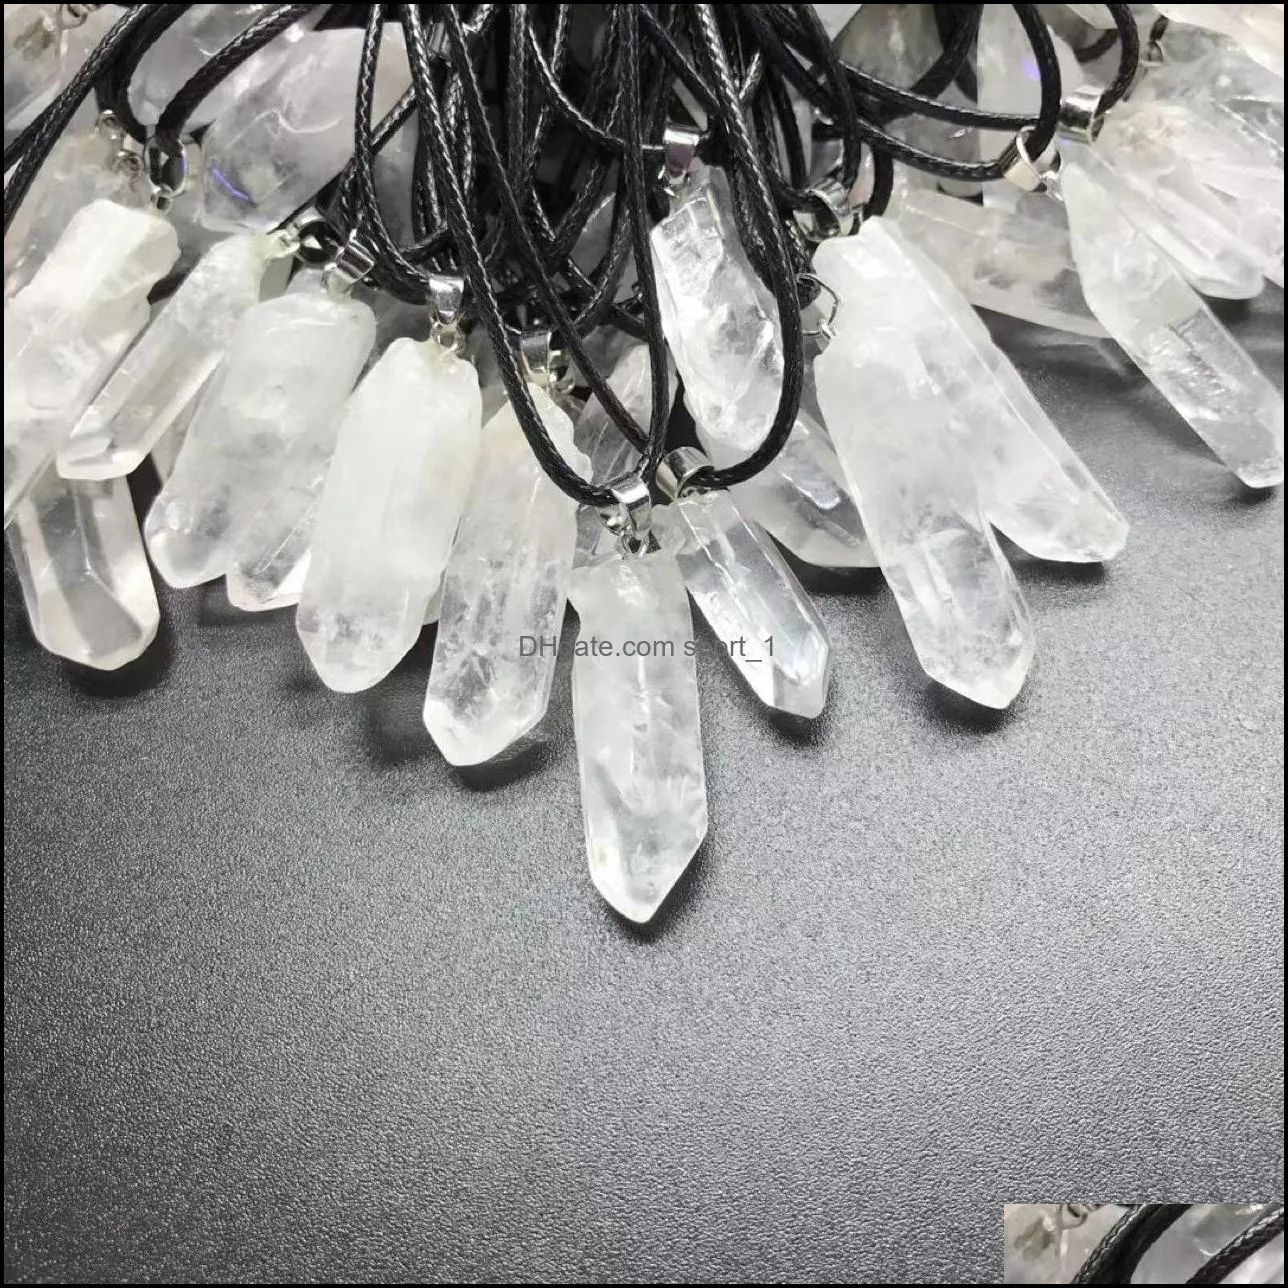 bulk natural yellow white crystal stone fluorite charms amethyst irregular shape pendants for necklace earrings jewelry makin sport1